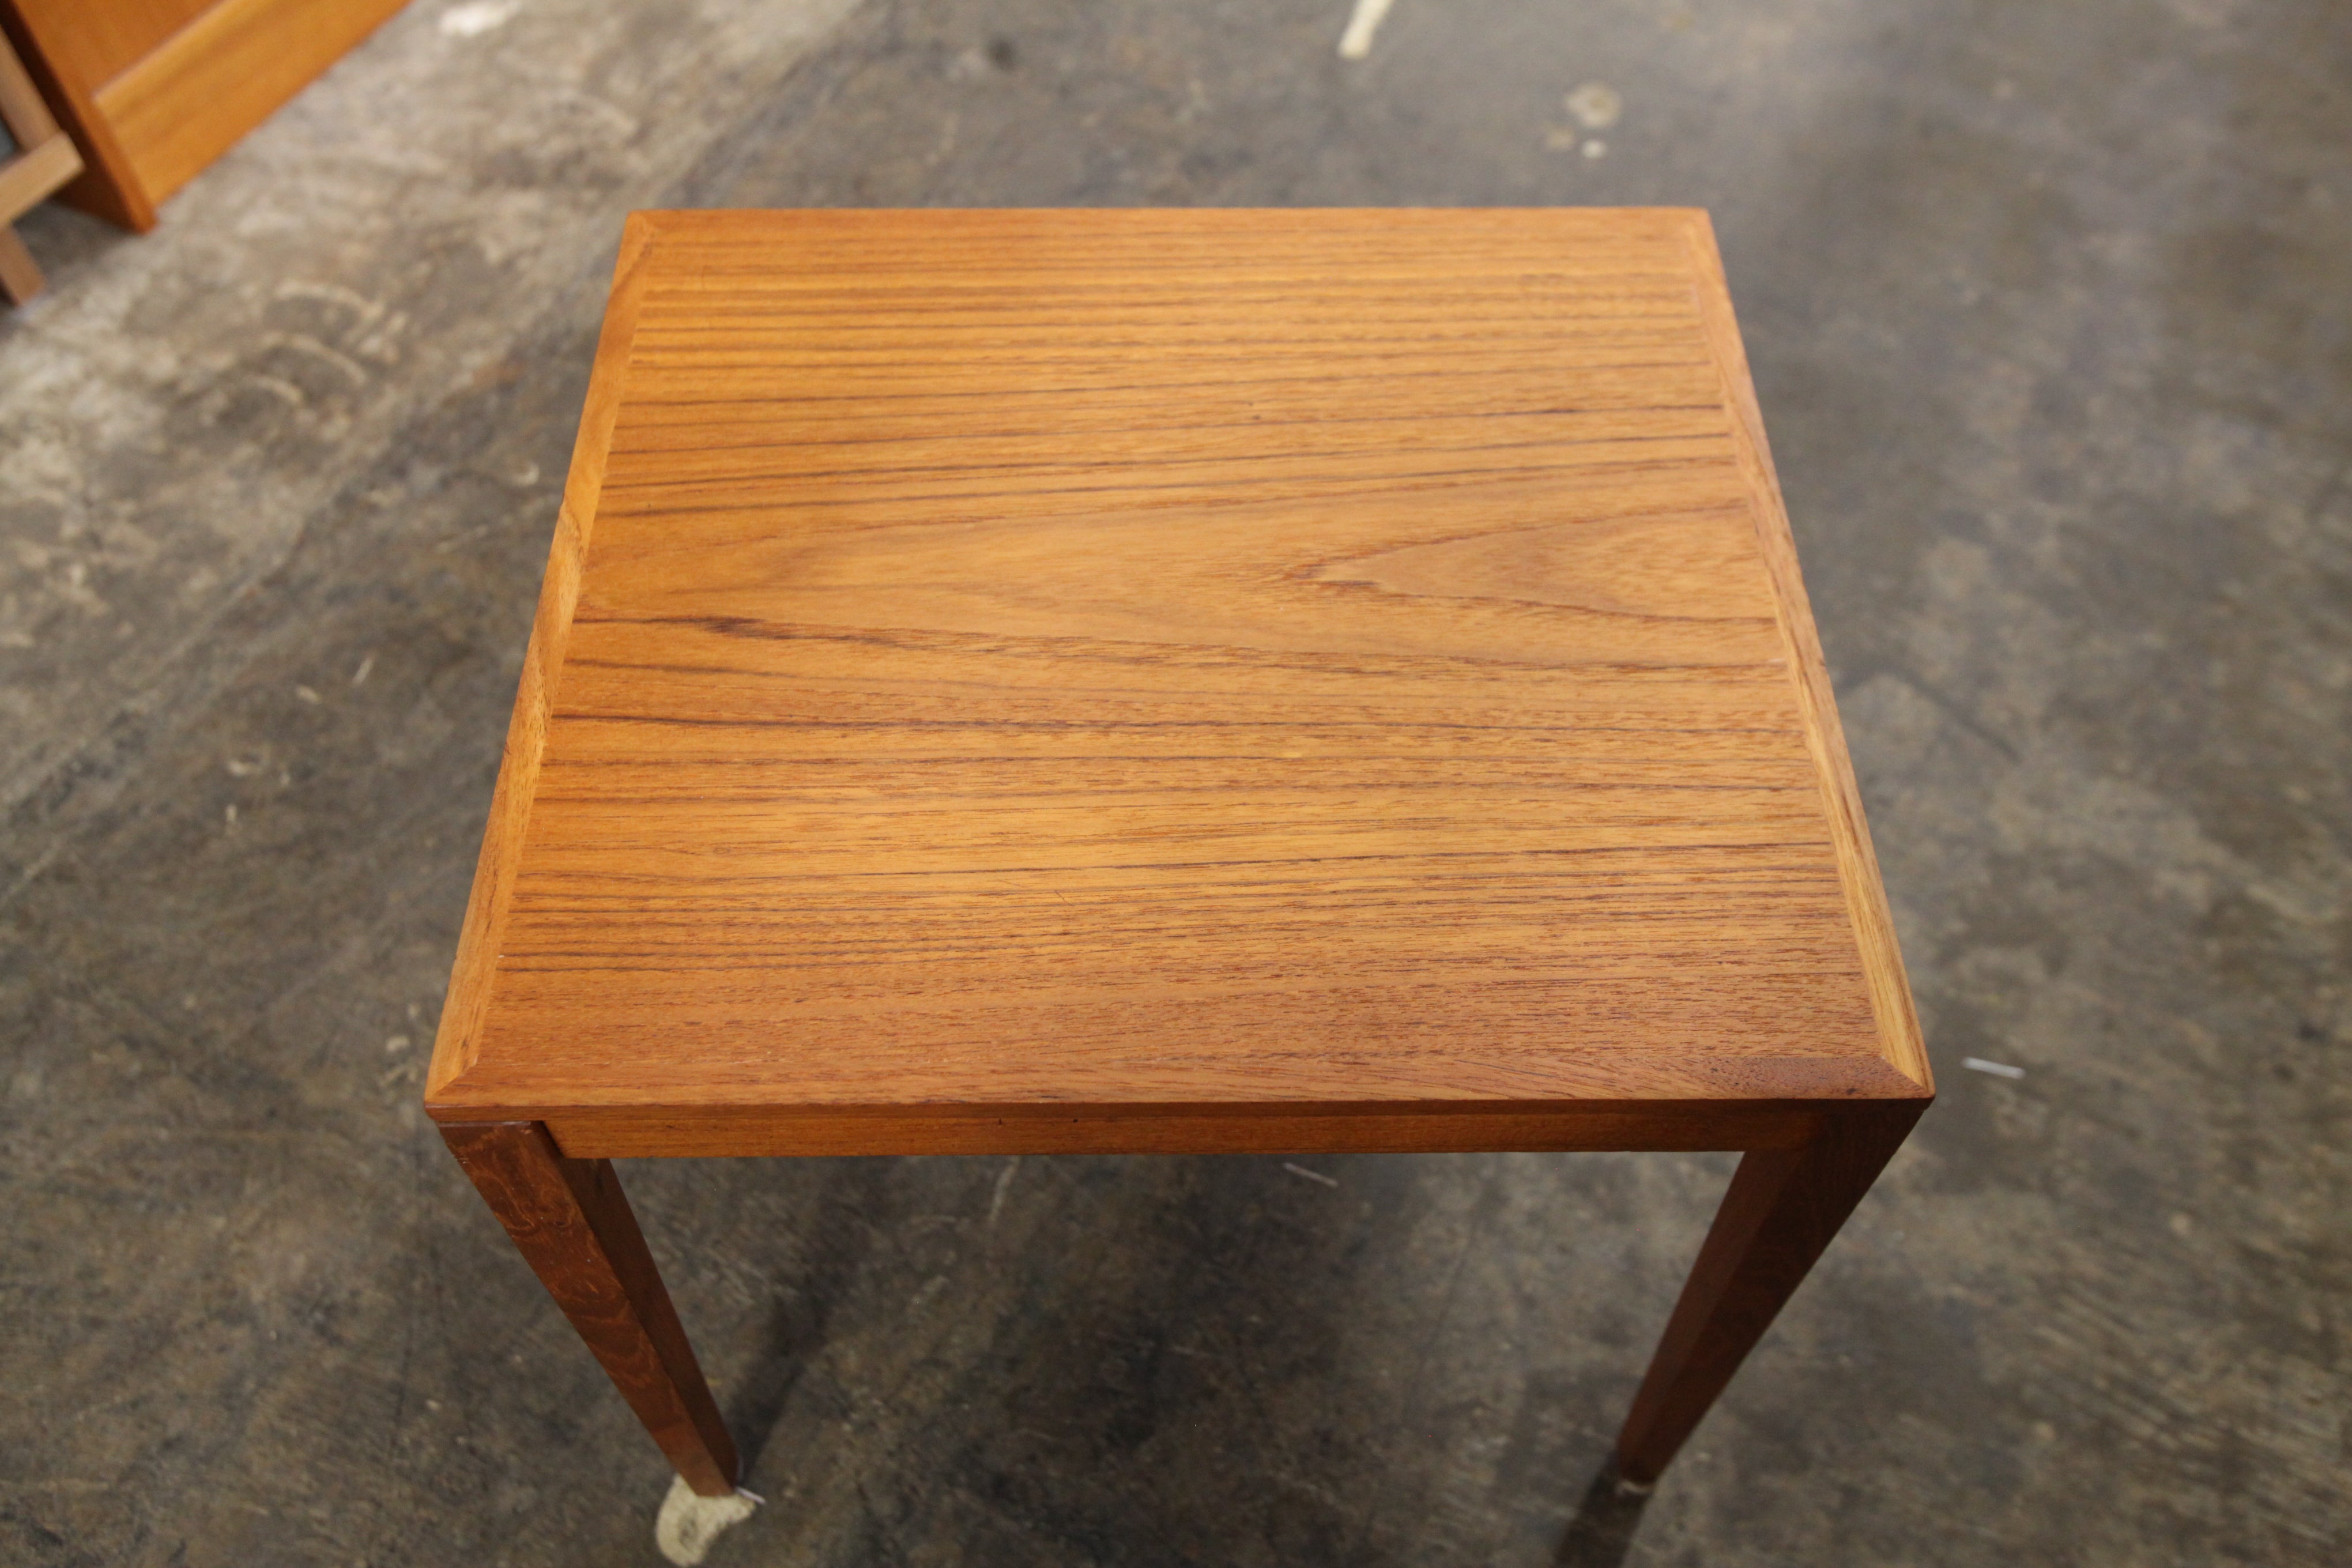 Small Vintage teak Side Table (17" x 15.5" x 15.75"H)